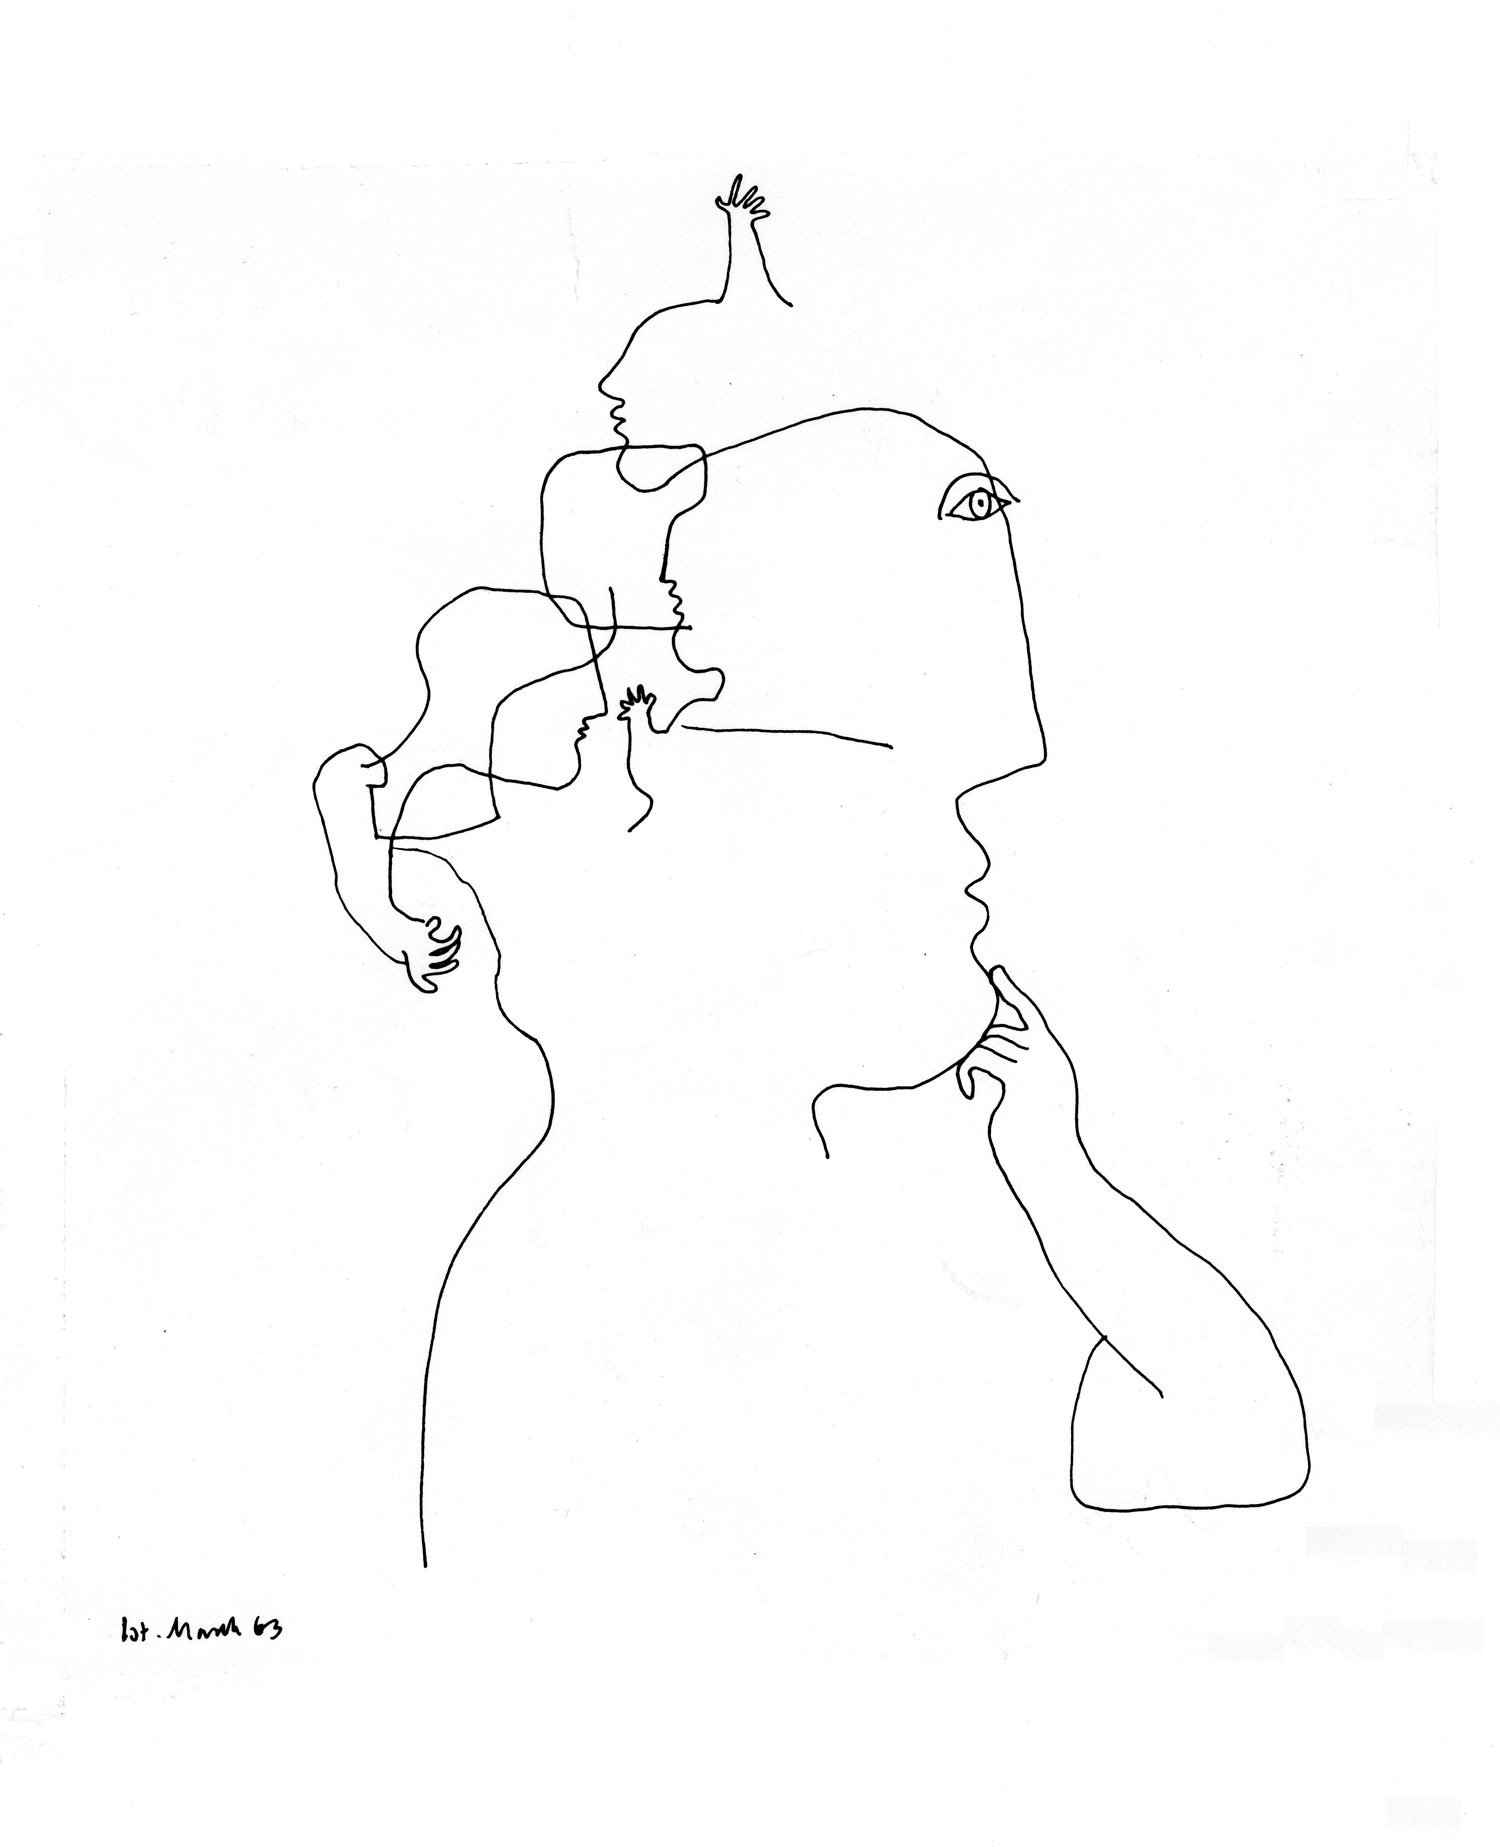 Franciszka Themerson, [Traces] thinking head (1963)